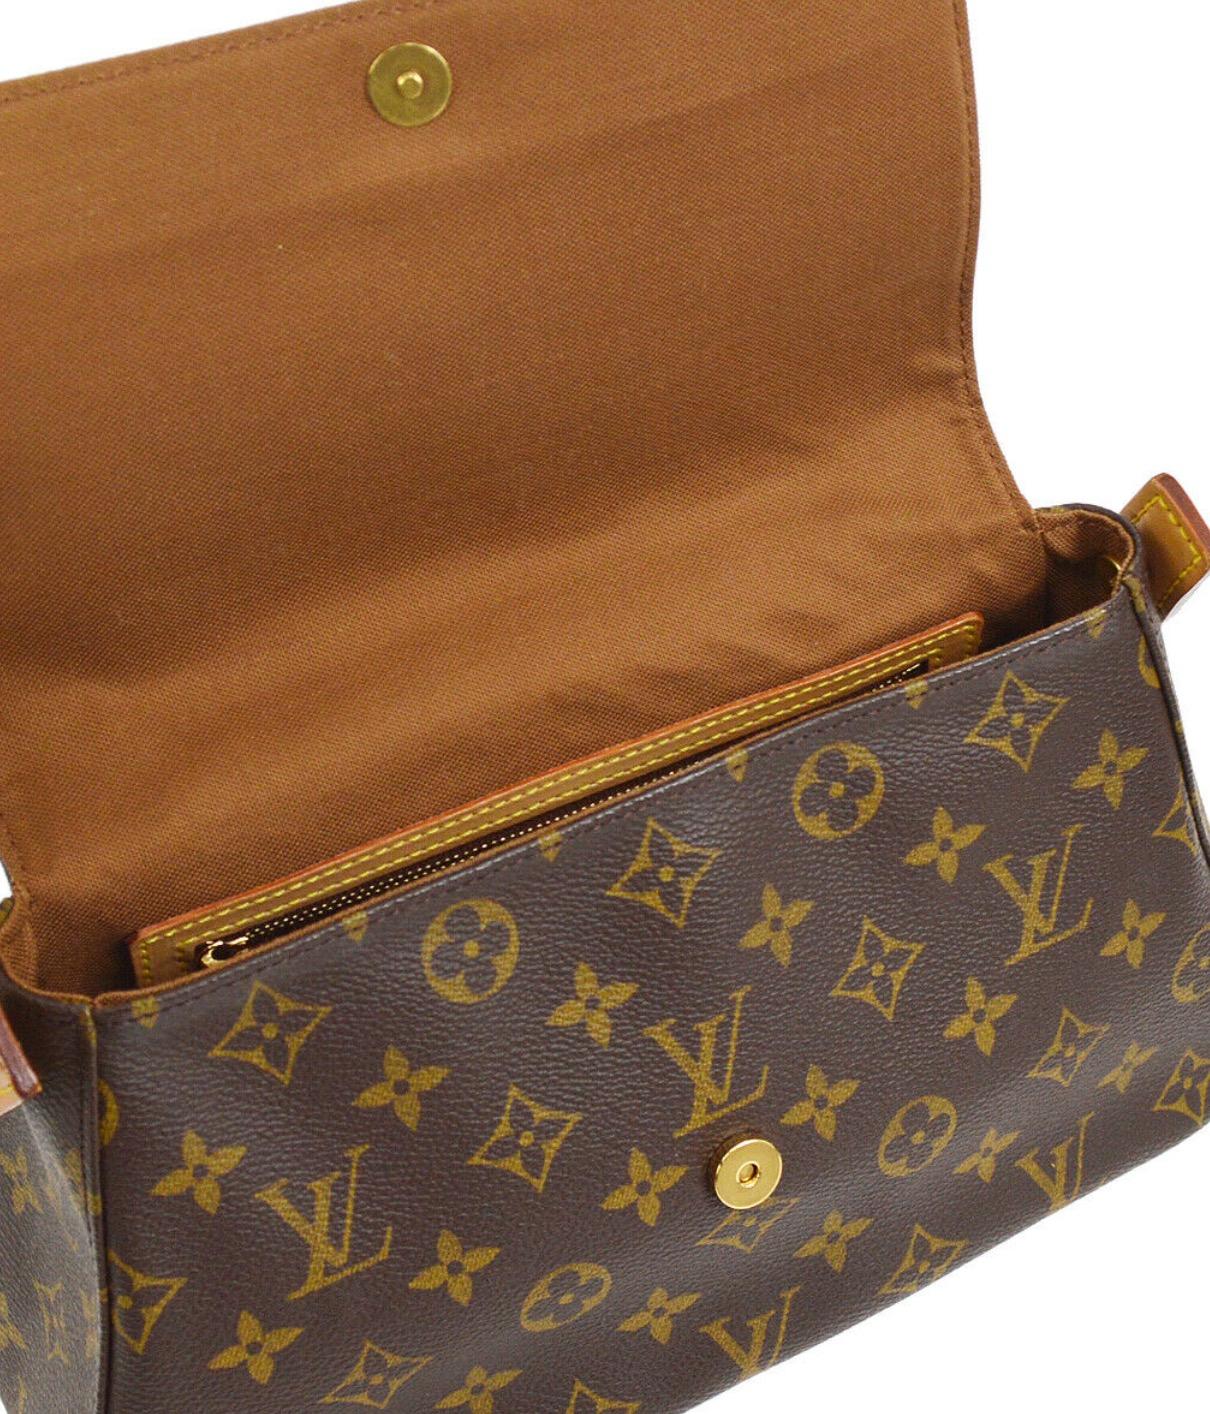 Brown Louis Vuitton Monogram Canvas Leather Small Top Handle Satchel Carryall Flap Bag